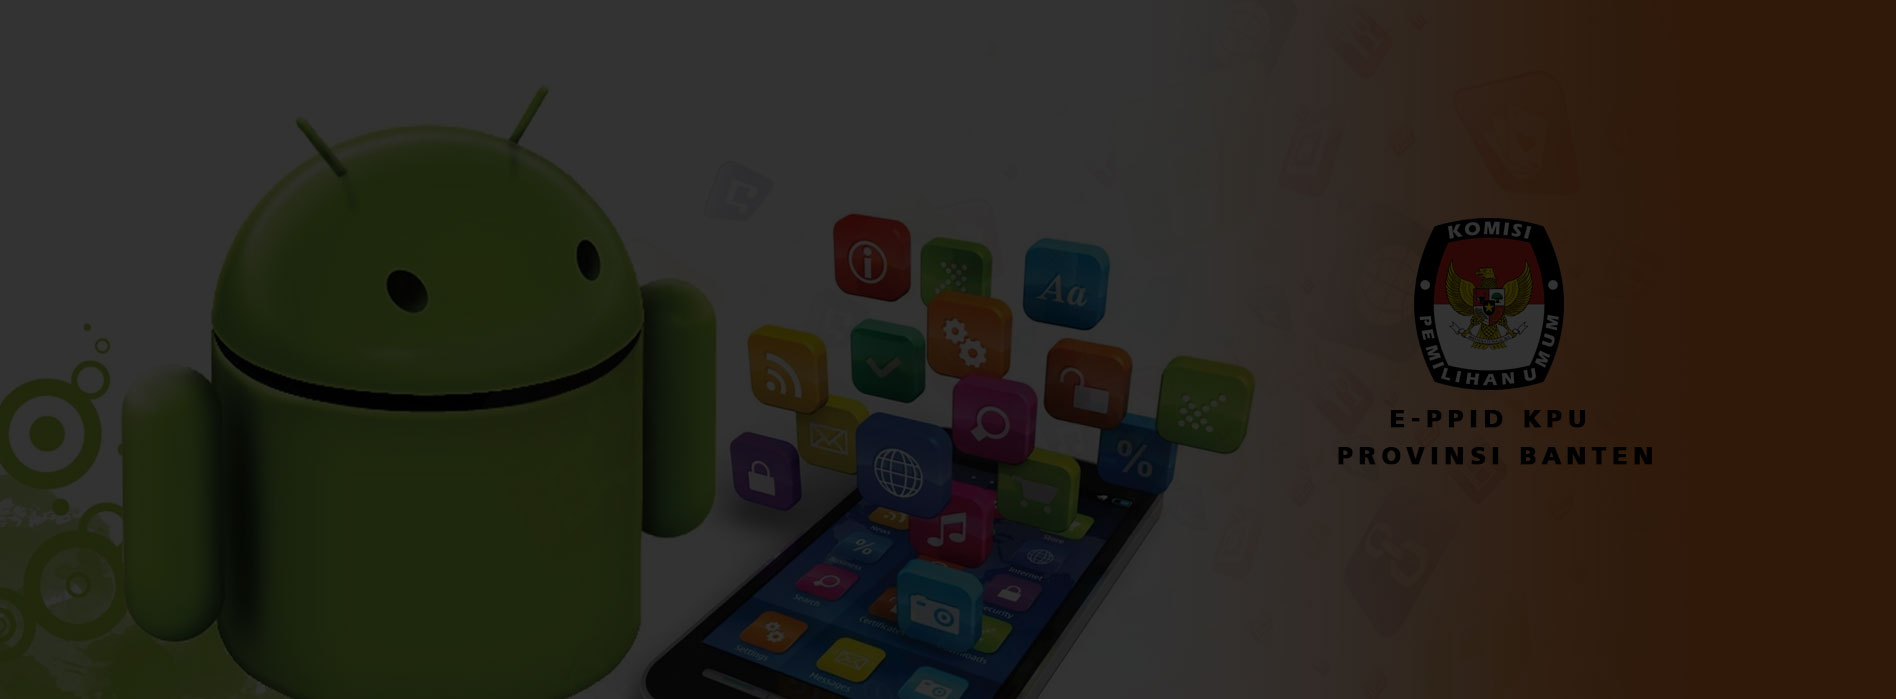 App Android E-PPID KPU Banten